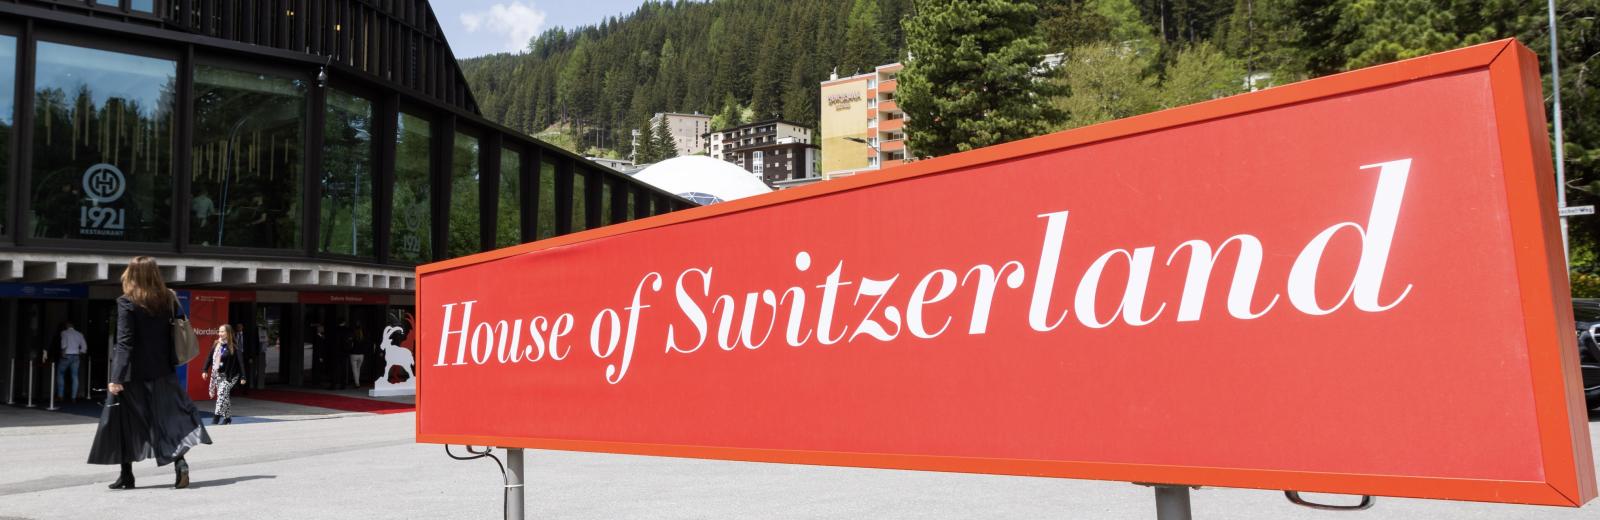 House of Switzerland at WEF